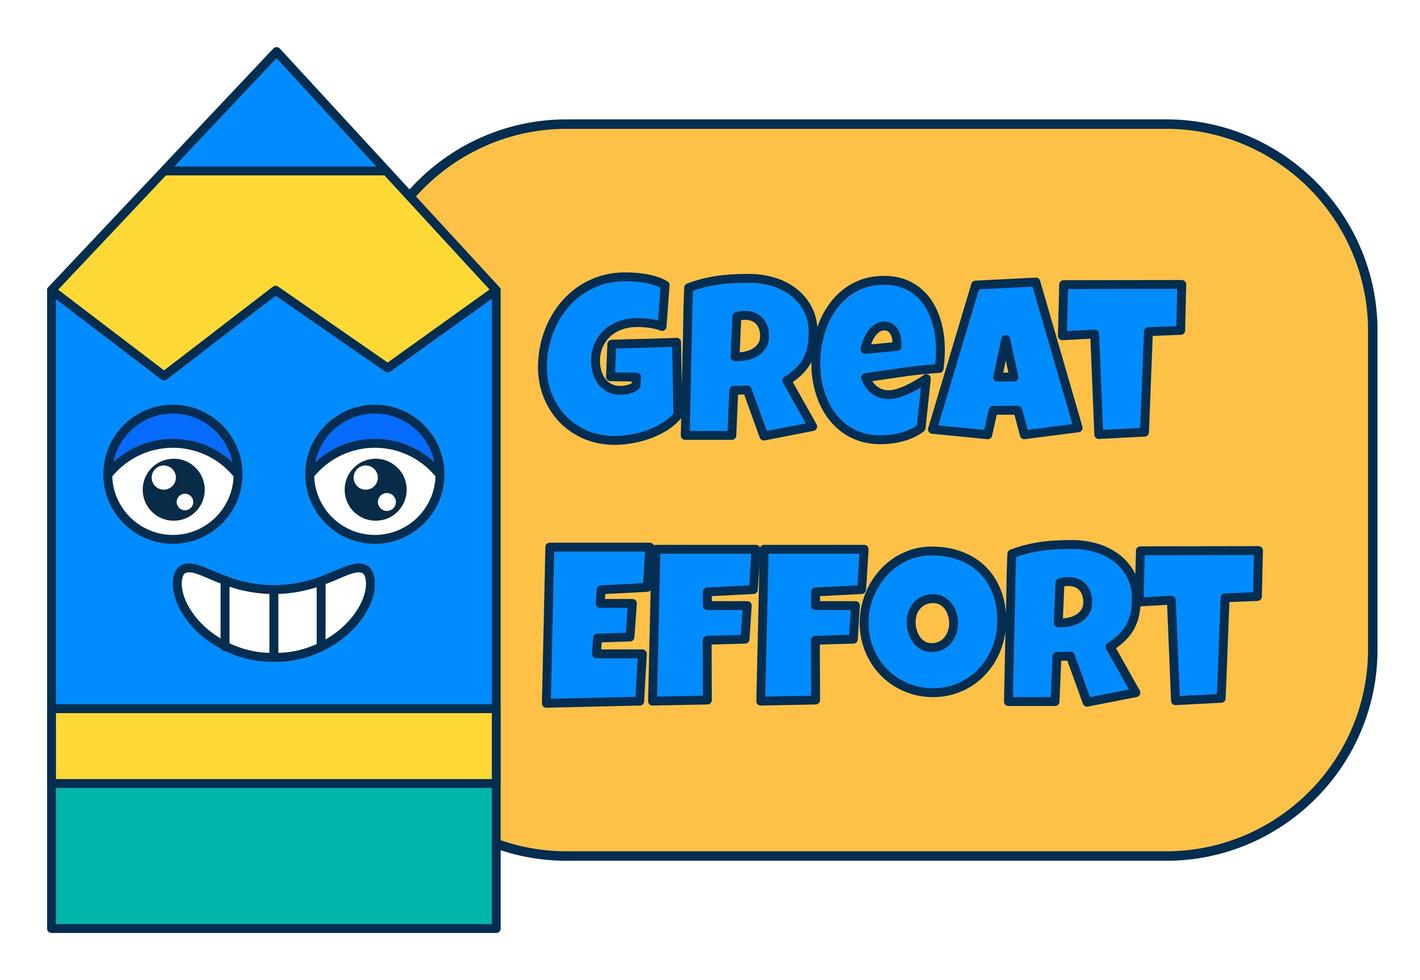 Great effort teacher reward sticker, school award vector